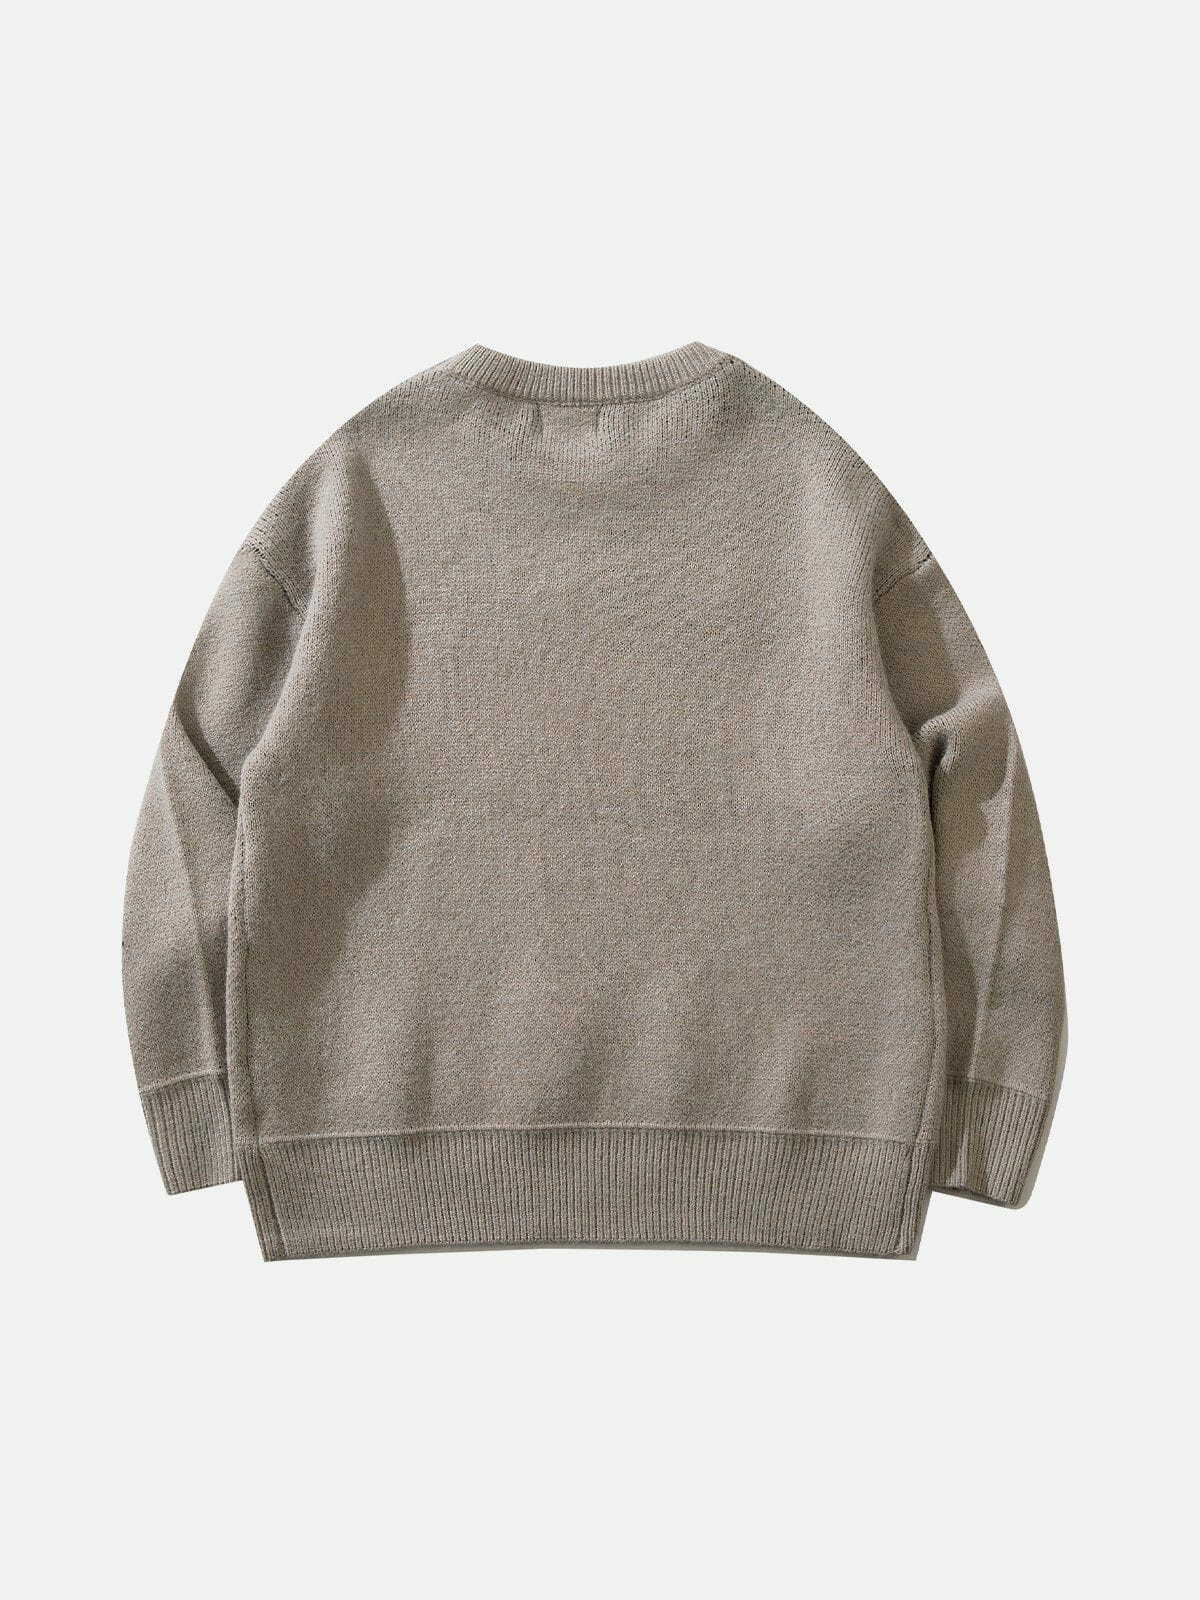 doberman print sweater edgy streetwear statement 7912